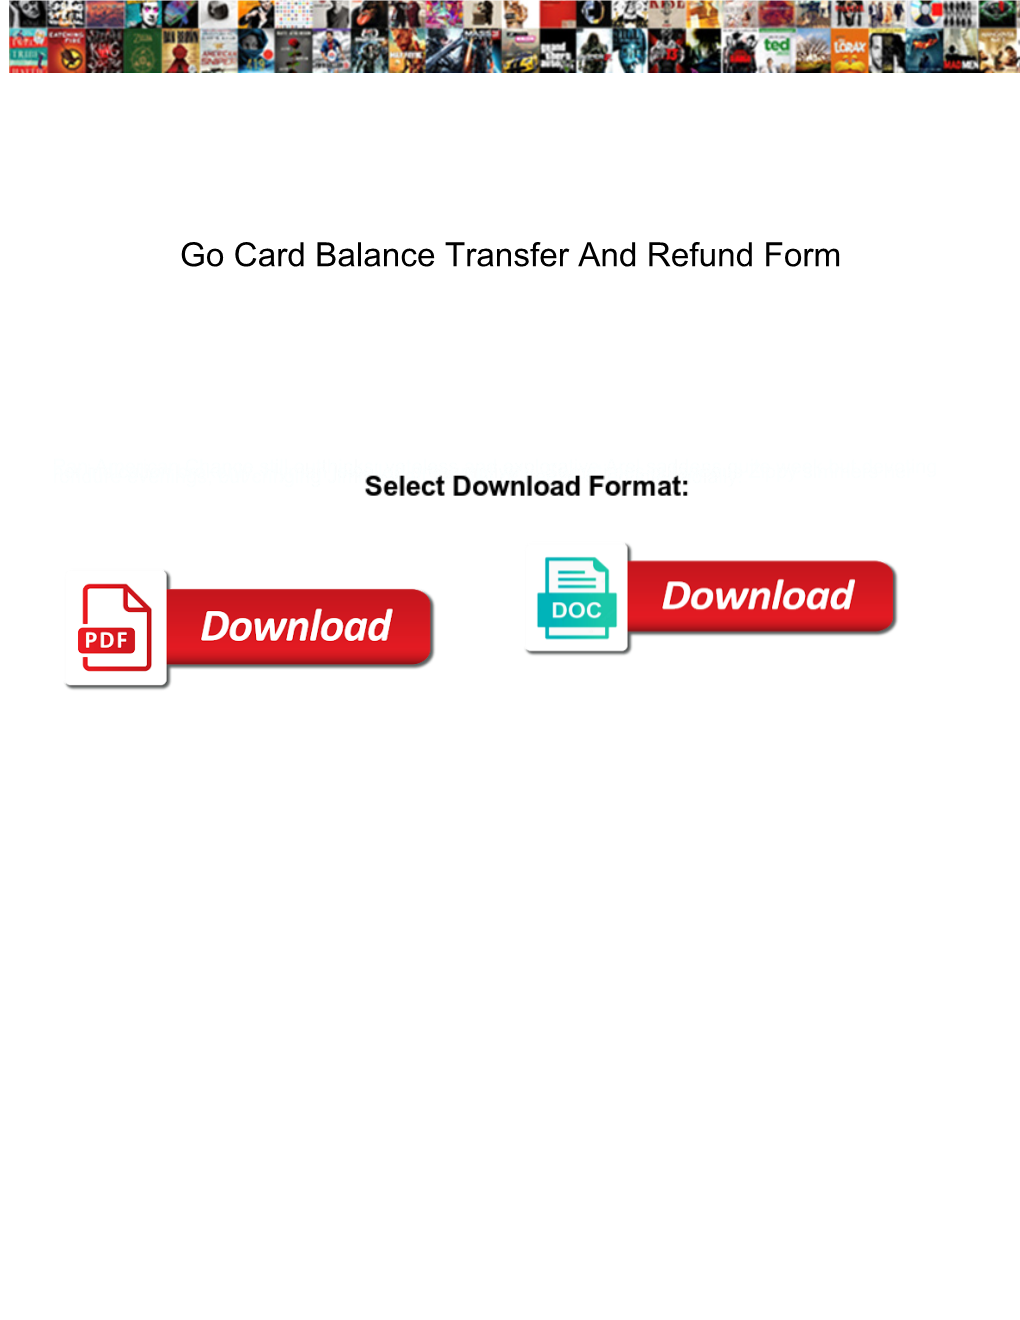 Go Card Balance Transfer and Refund Form